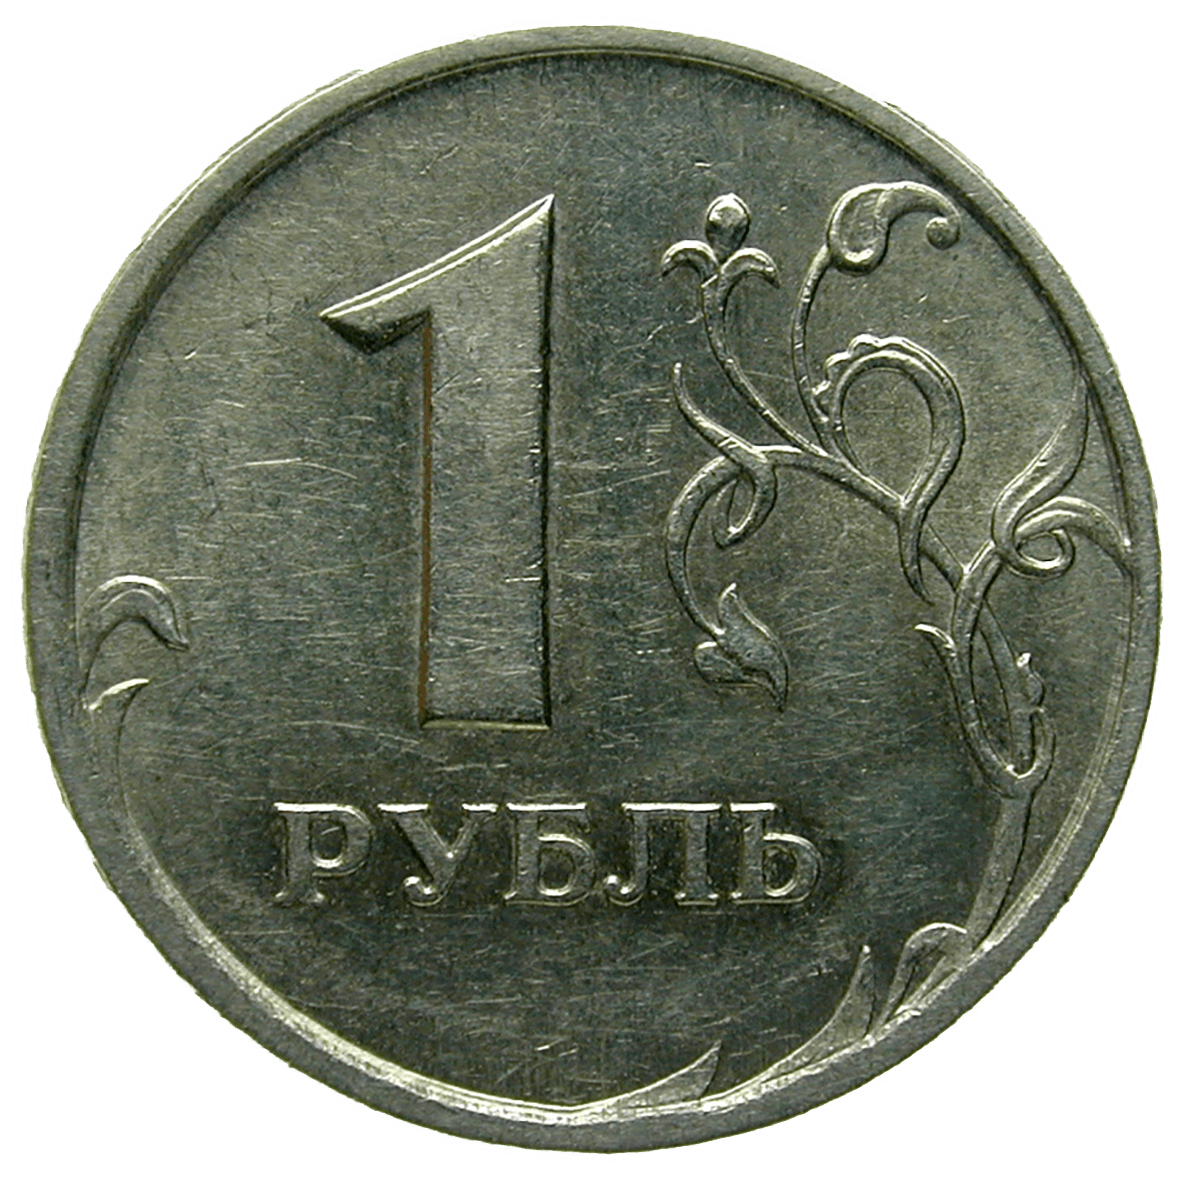 Russian Federation, 1 Ruble 1997 (reverse)